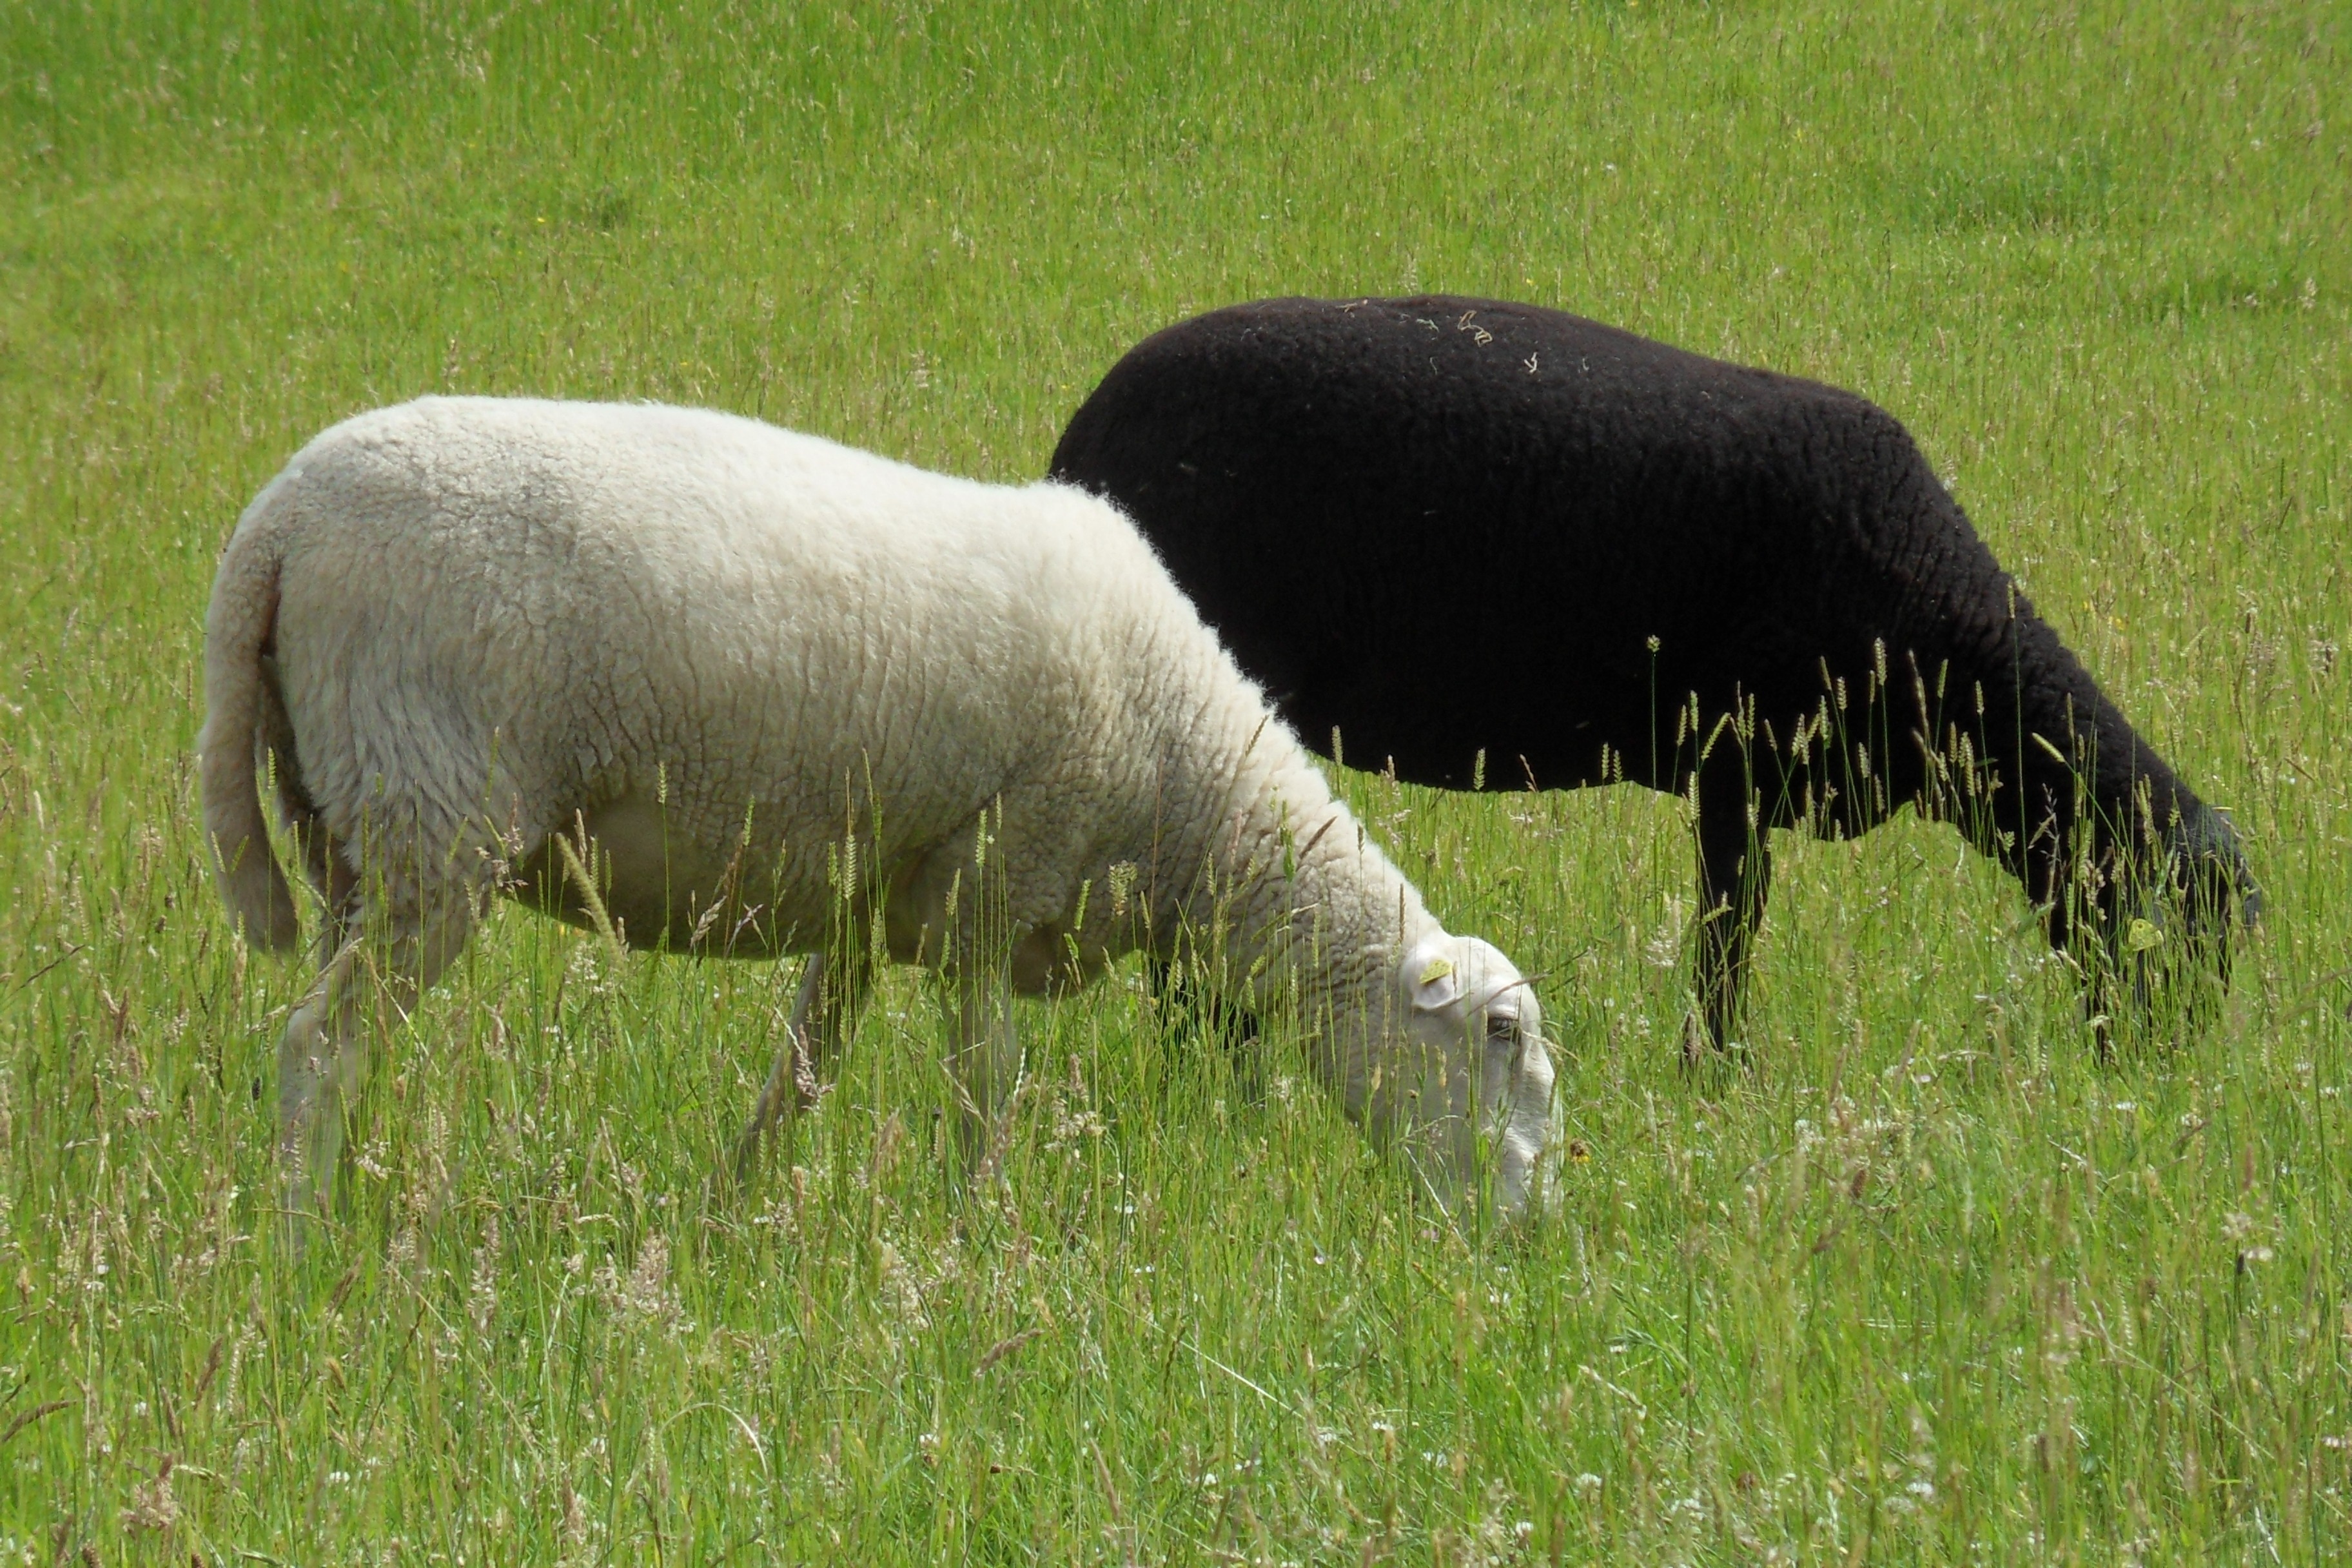 black and white sheep